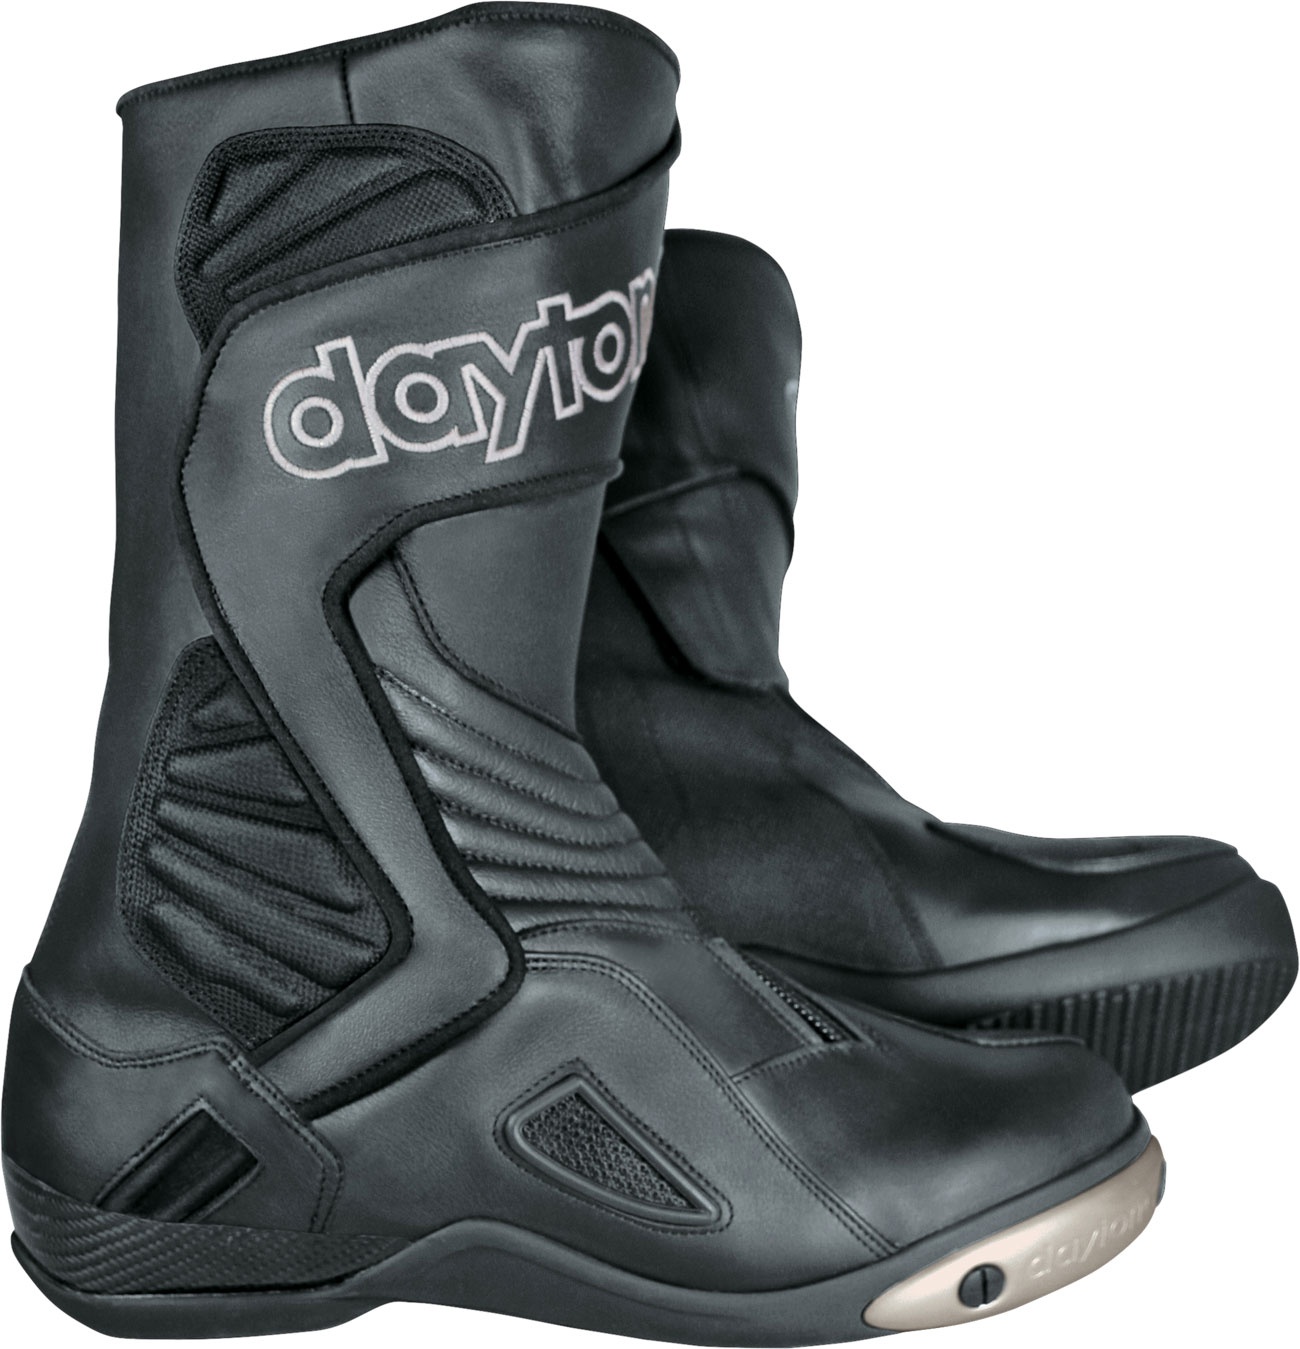 Daytona outer boots for EVO VOLTEX - Noir - 43